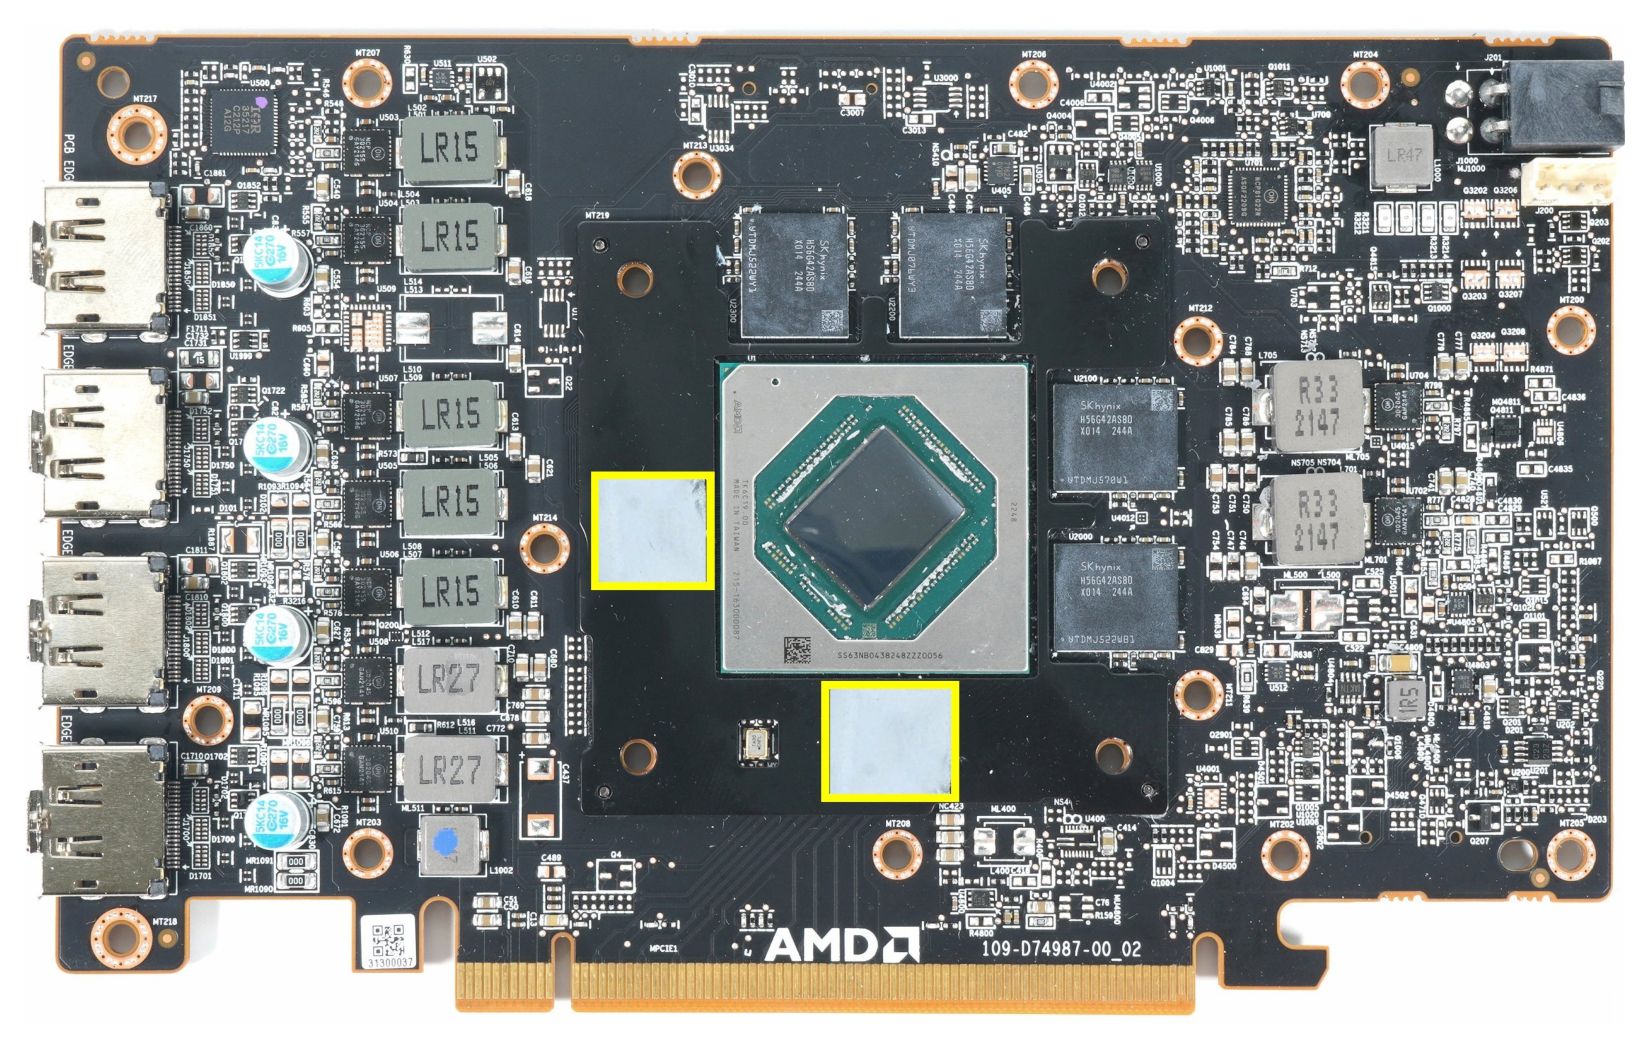 IgorsLab] Radeon RX 6900XT or GeForce RTX 3090 for testing with Intel's new  CPUs? : r/intel